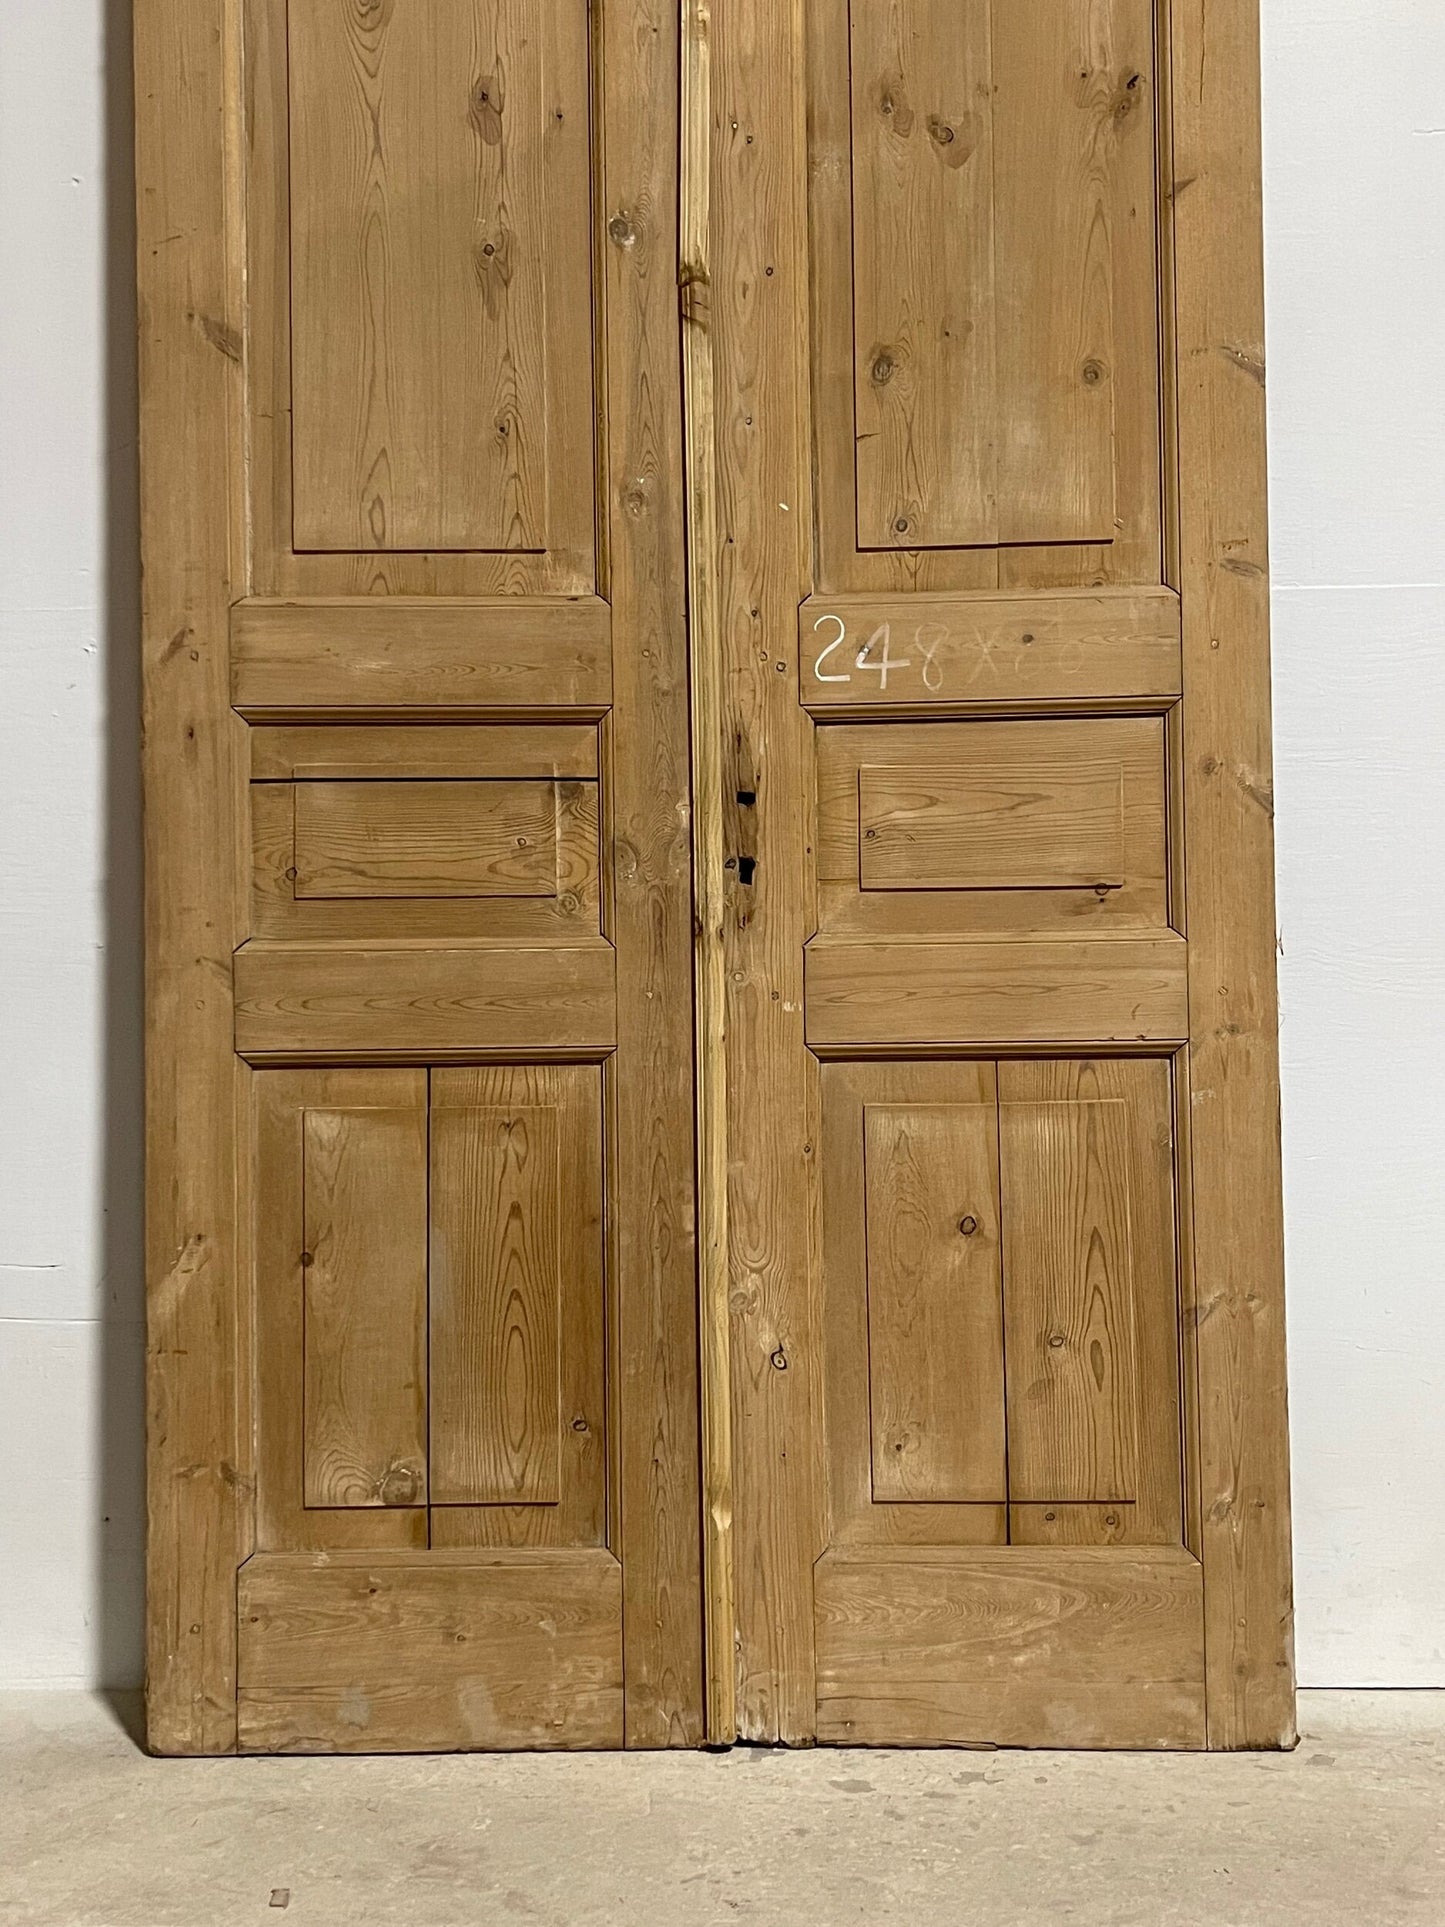 Antique French panel doors (97.5x46.5) I173